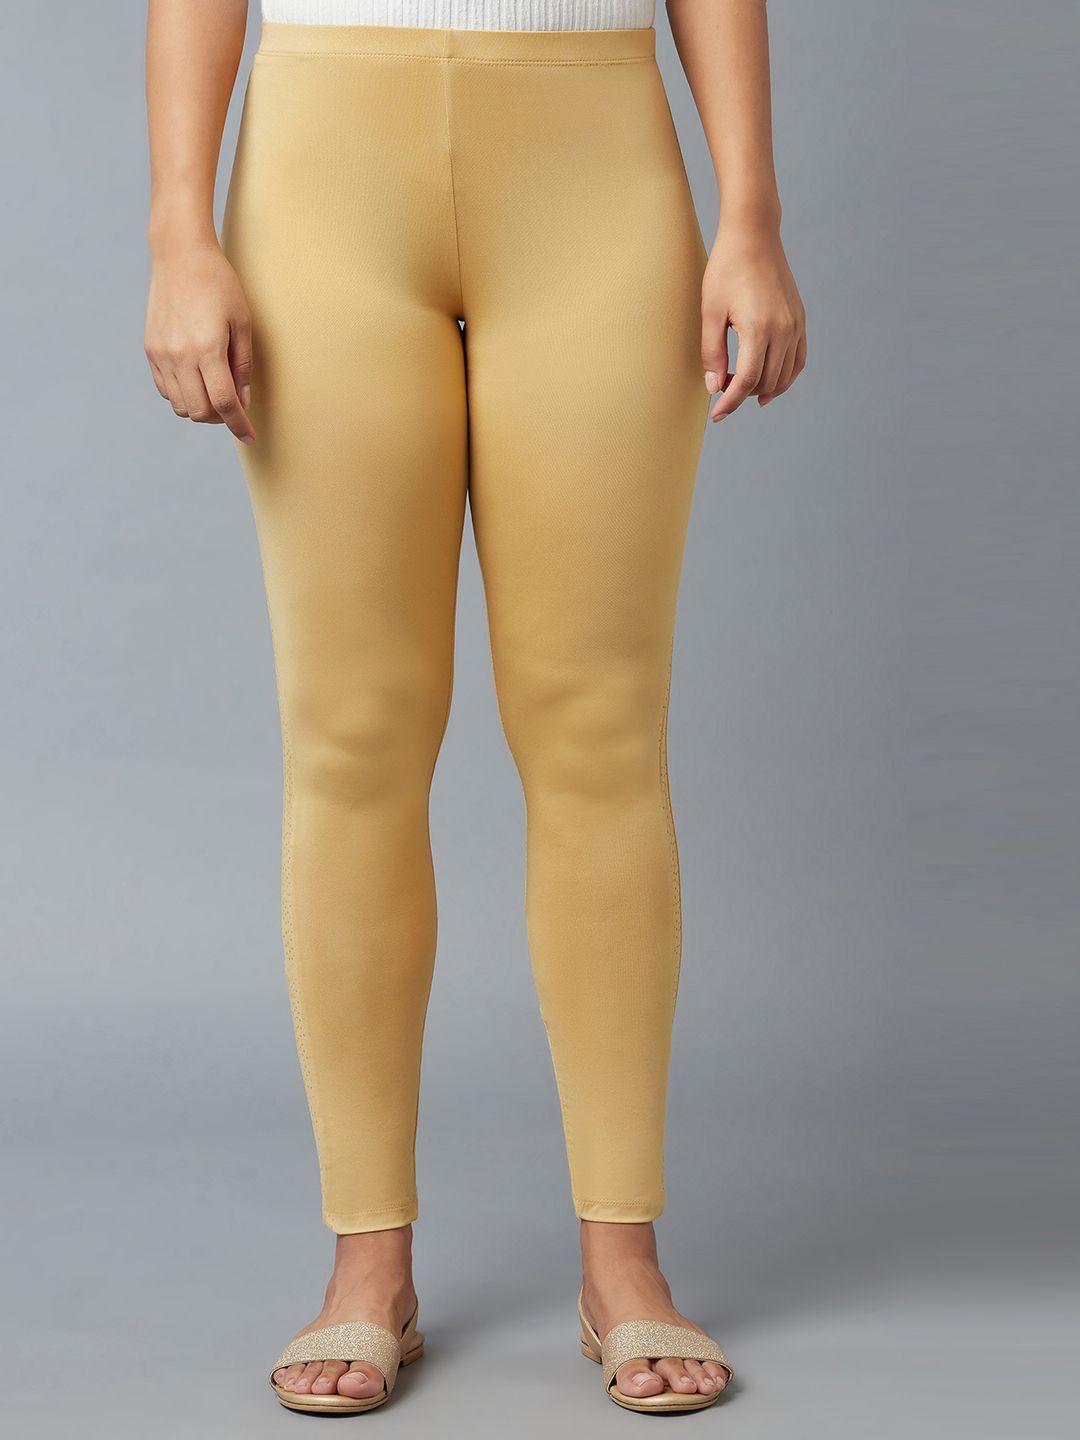 elleven-women-beige-solid-ankle-length-tights